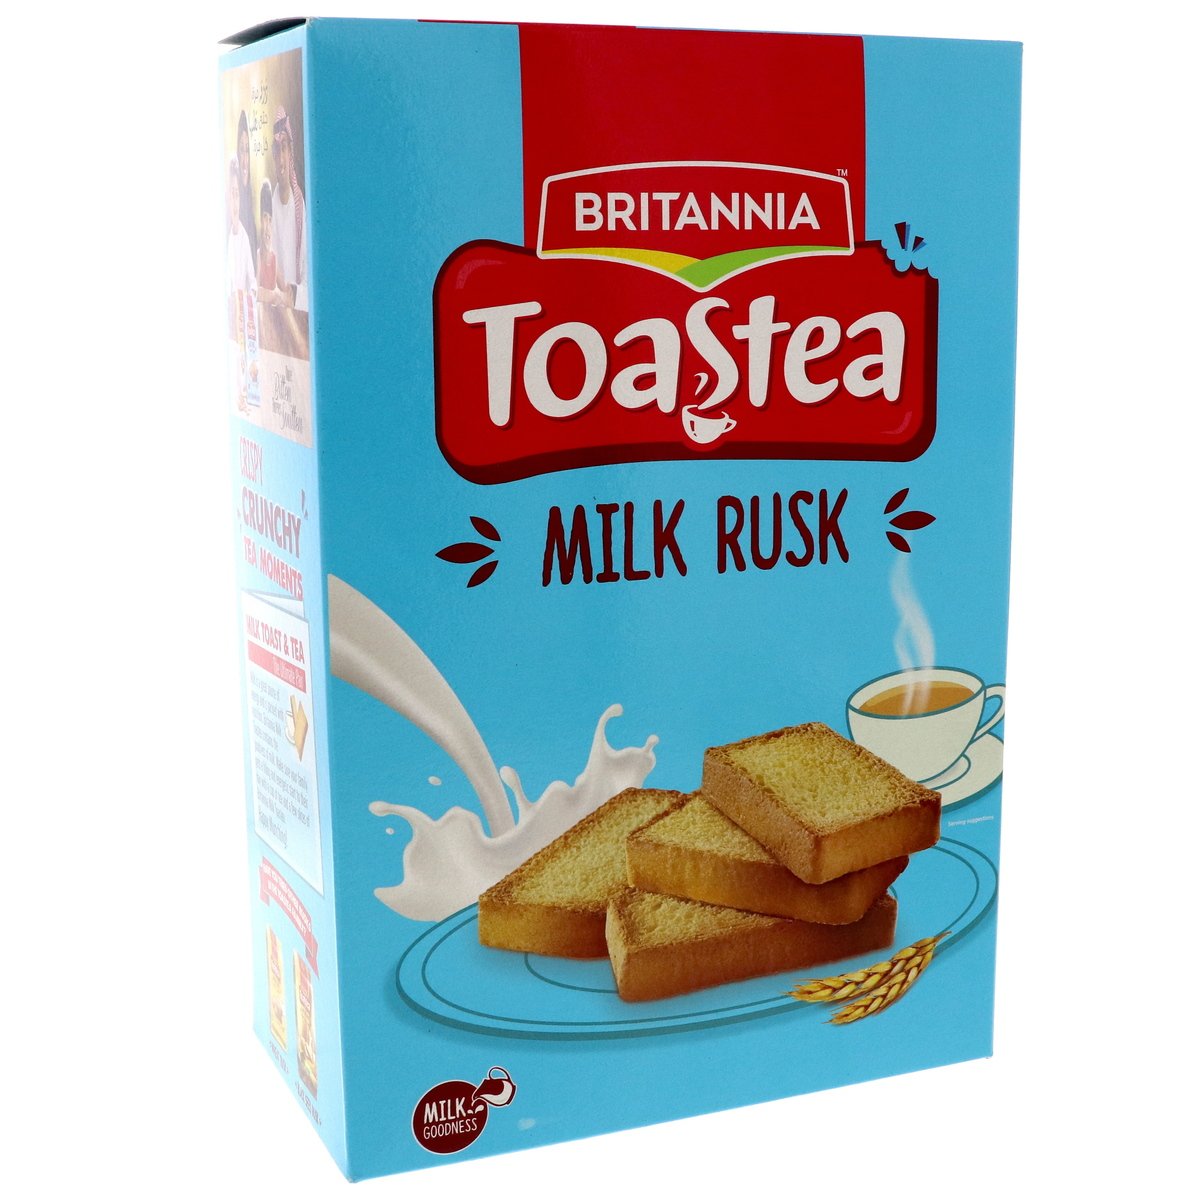 Britannia Toastea Milk Rusk 620g